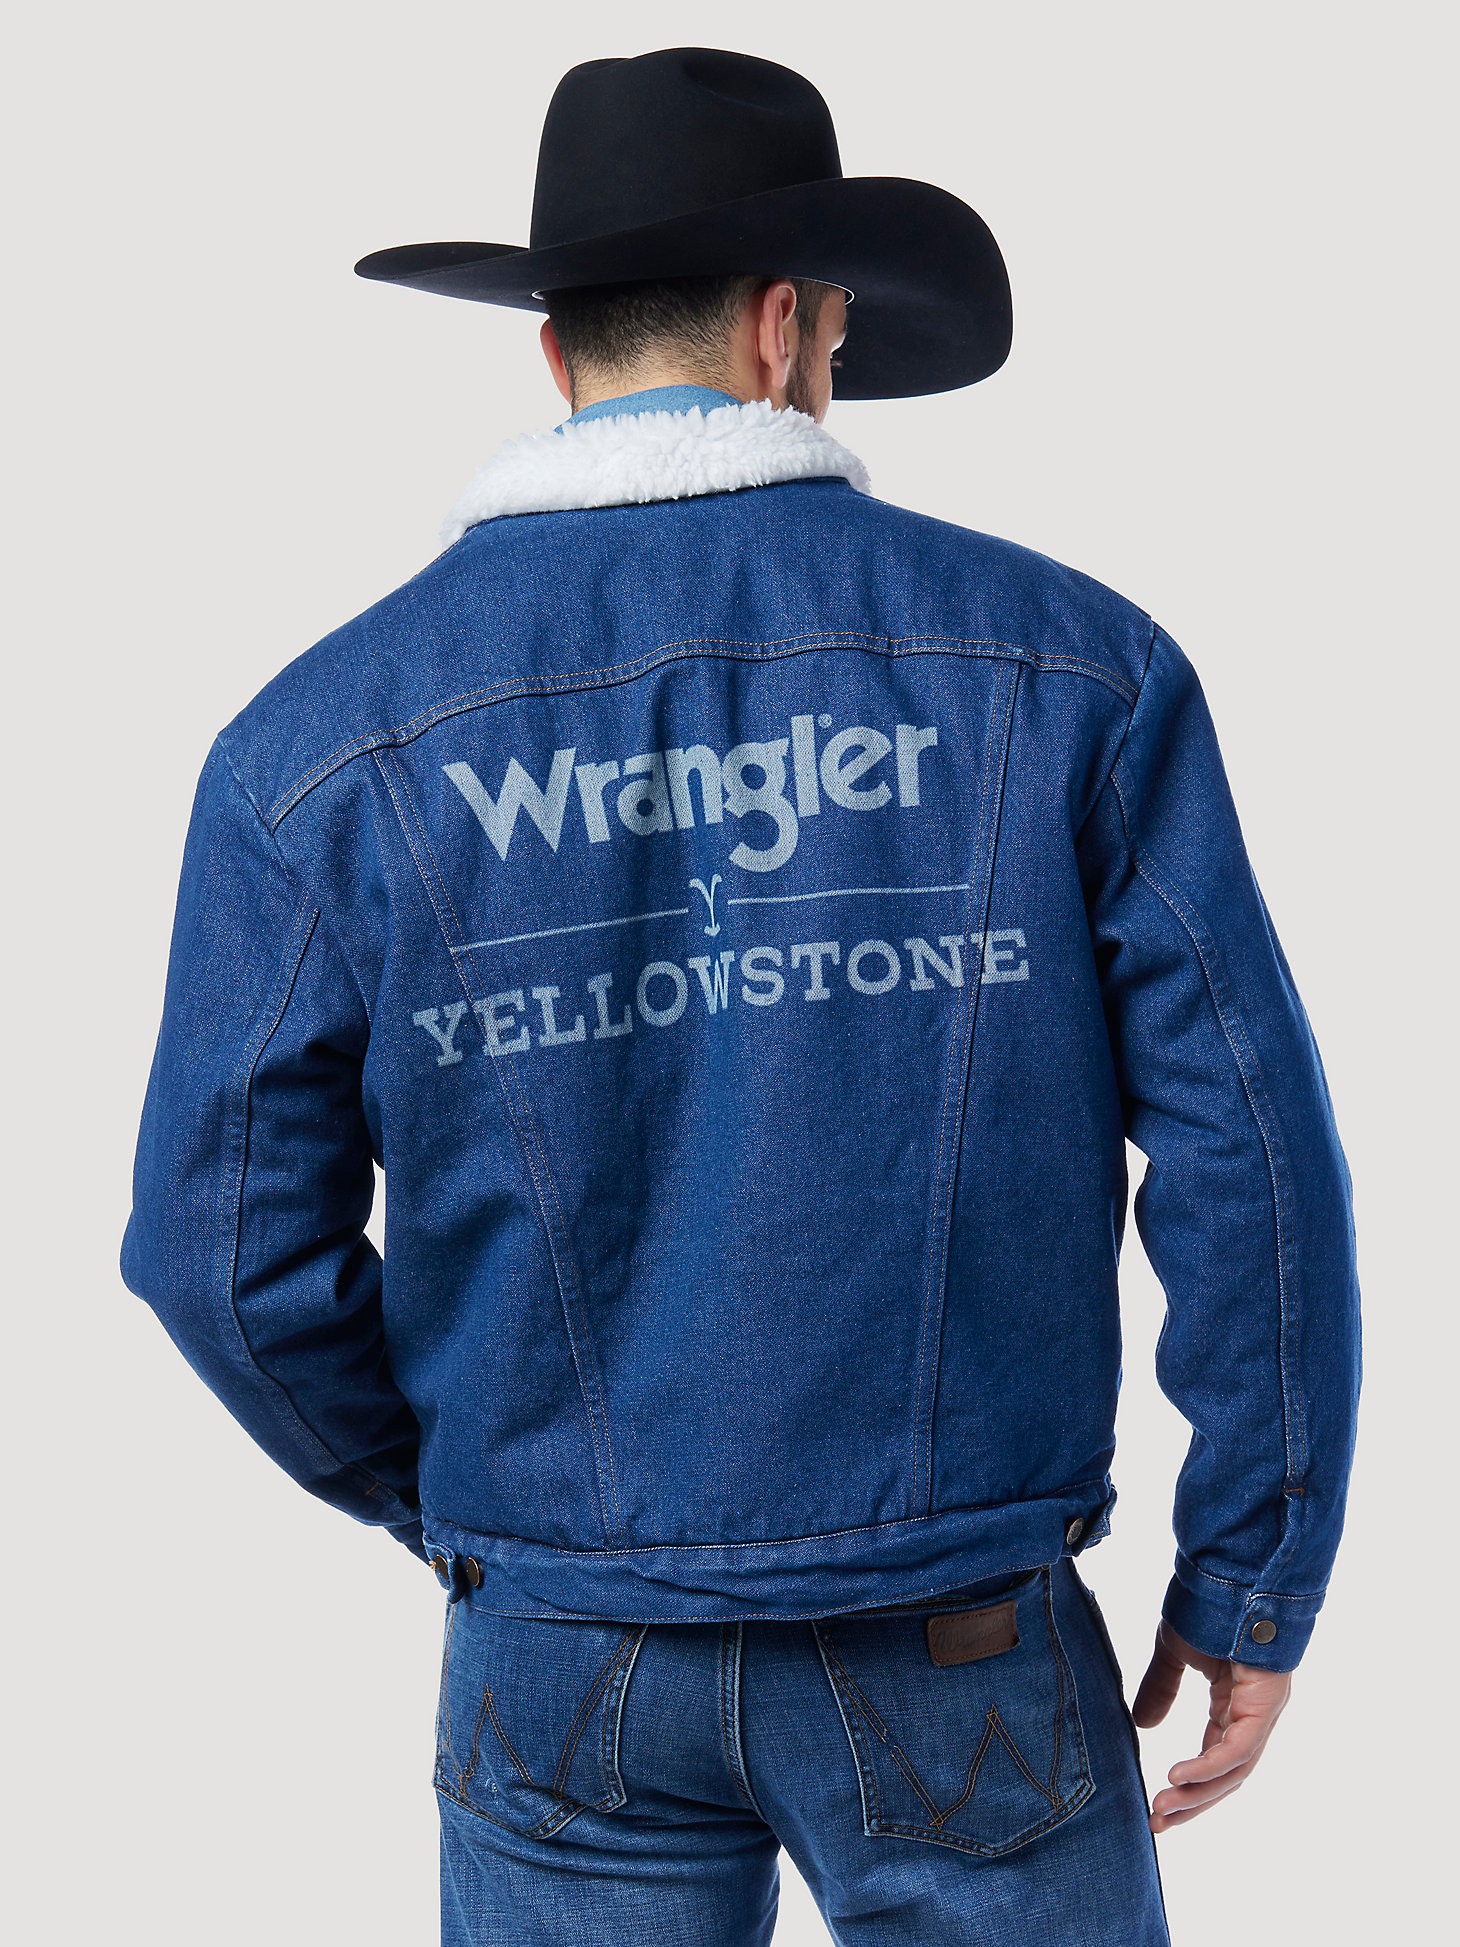 Wrangler x Yellowstone Men's Sherpa Lined Denim Jacket in Medium Rinse Wash alternative view 1